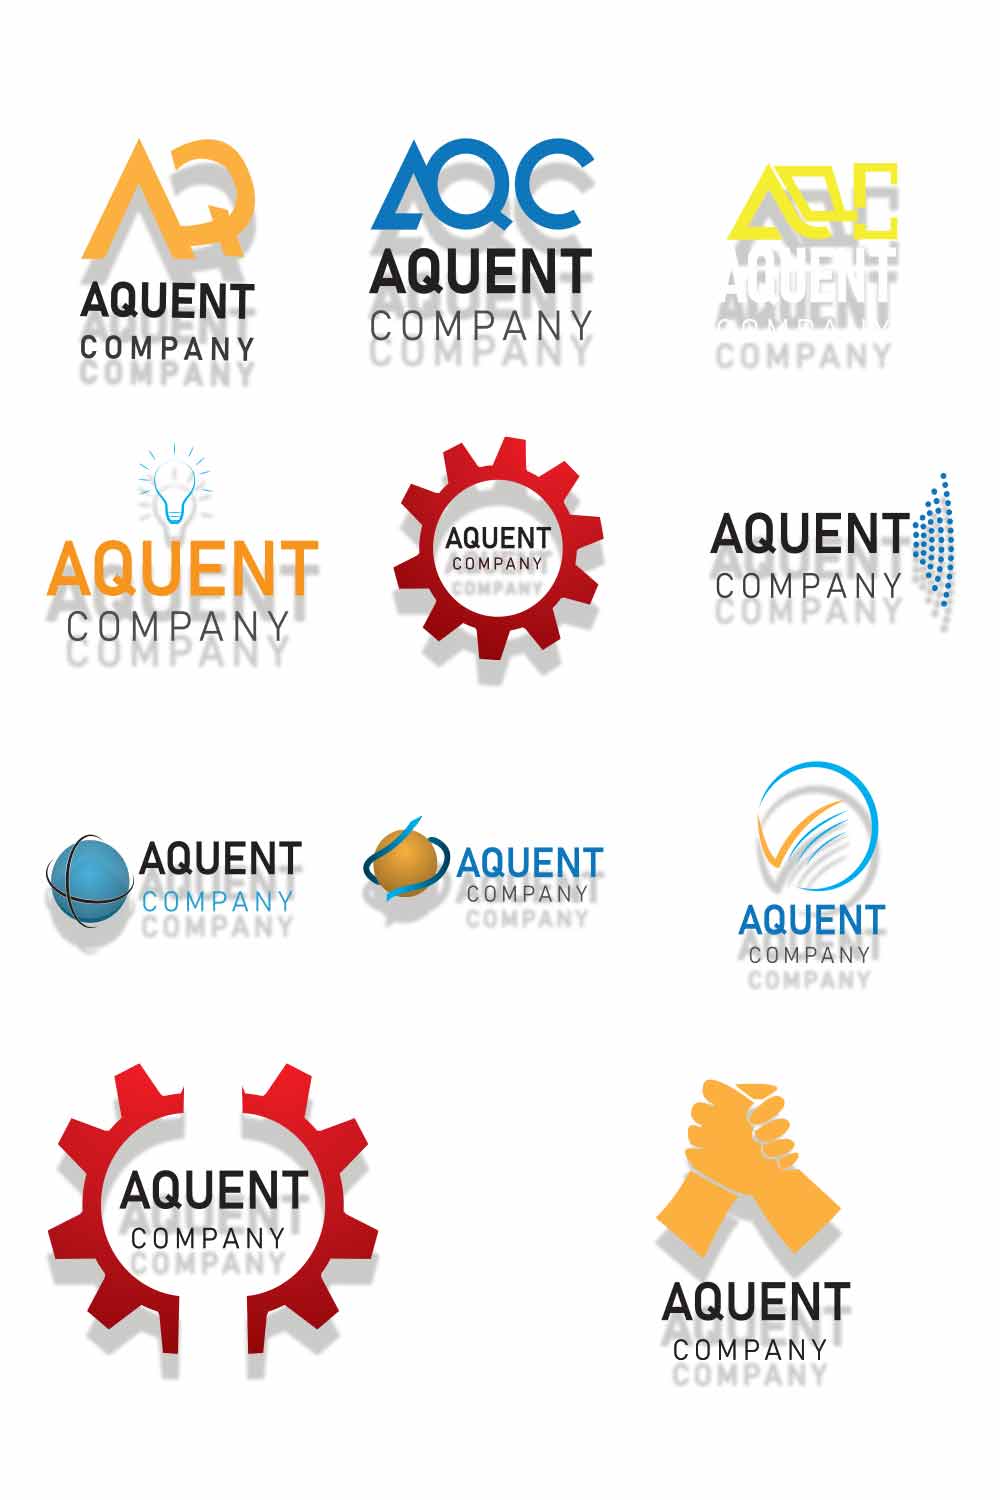 Aquent company logo pinterest preview image.